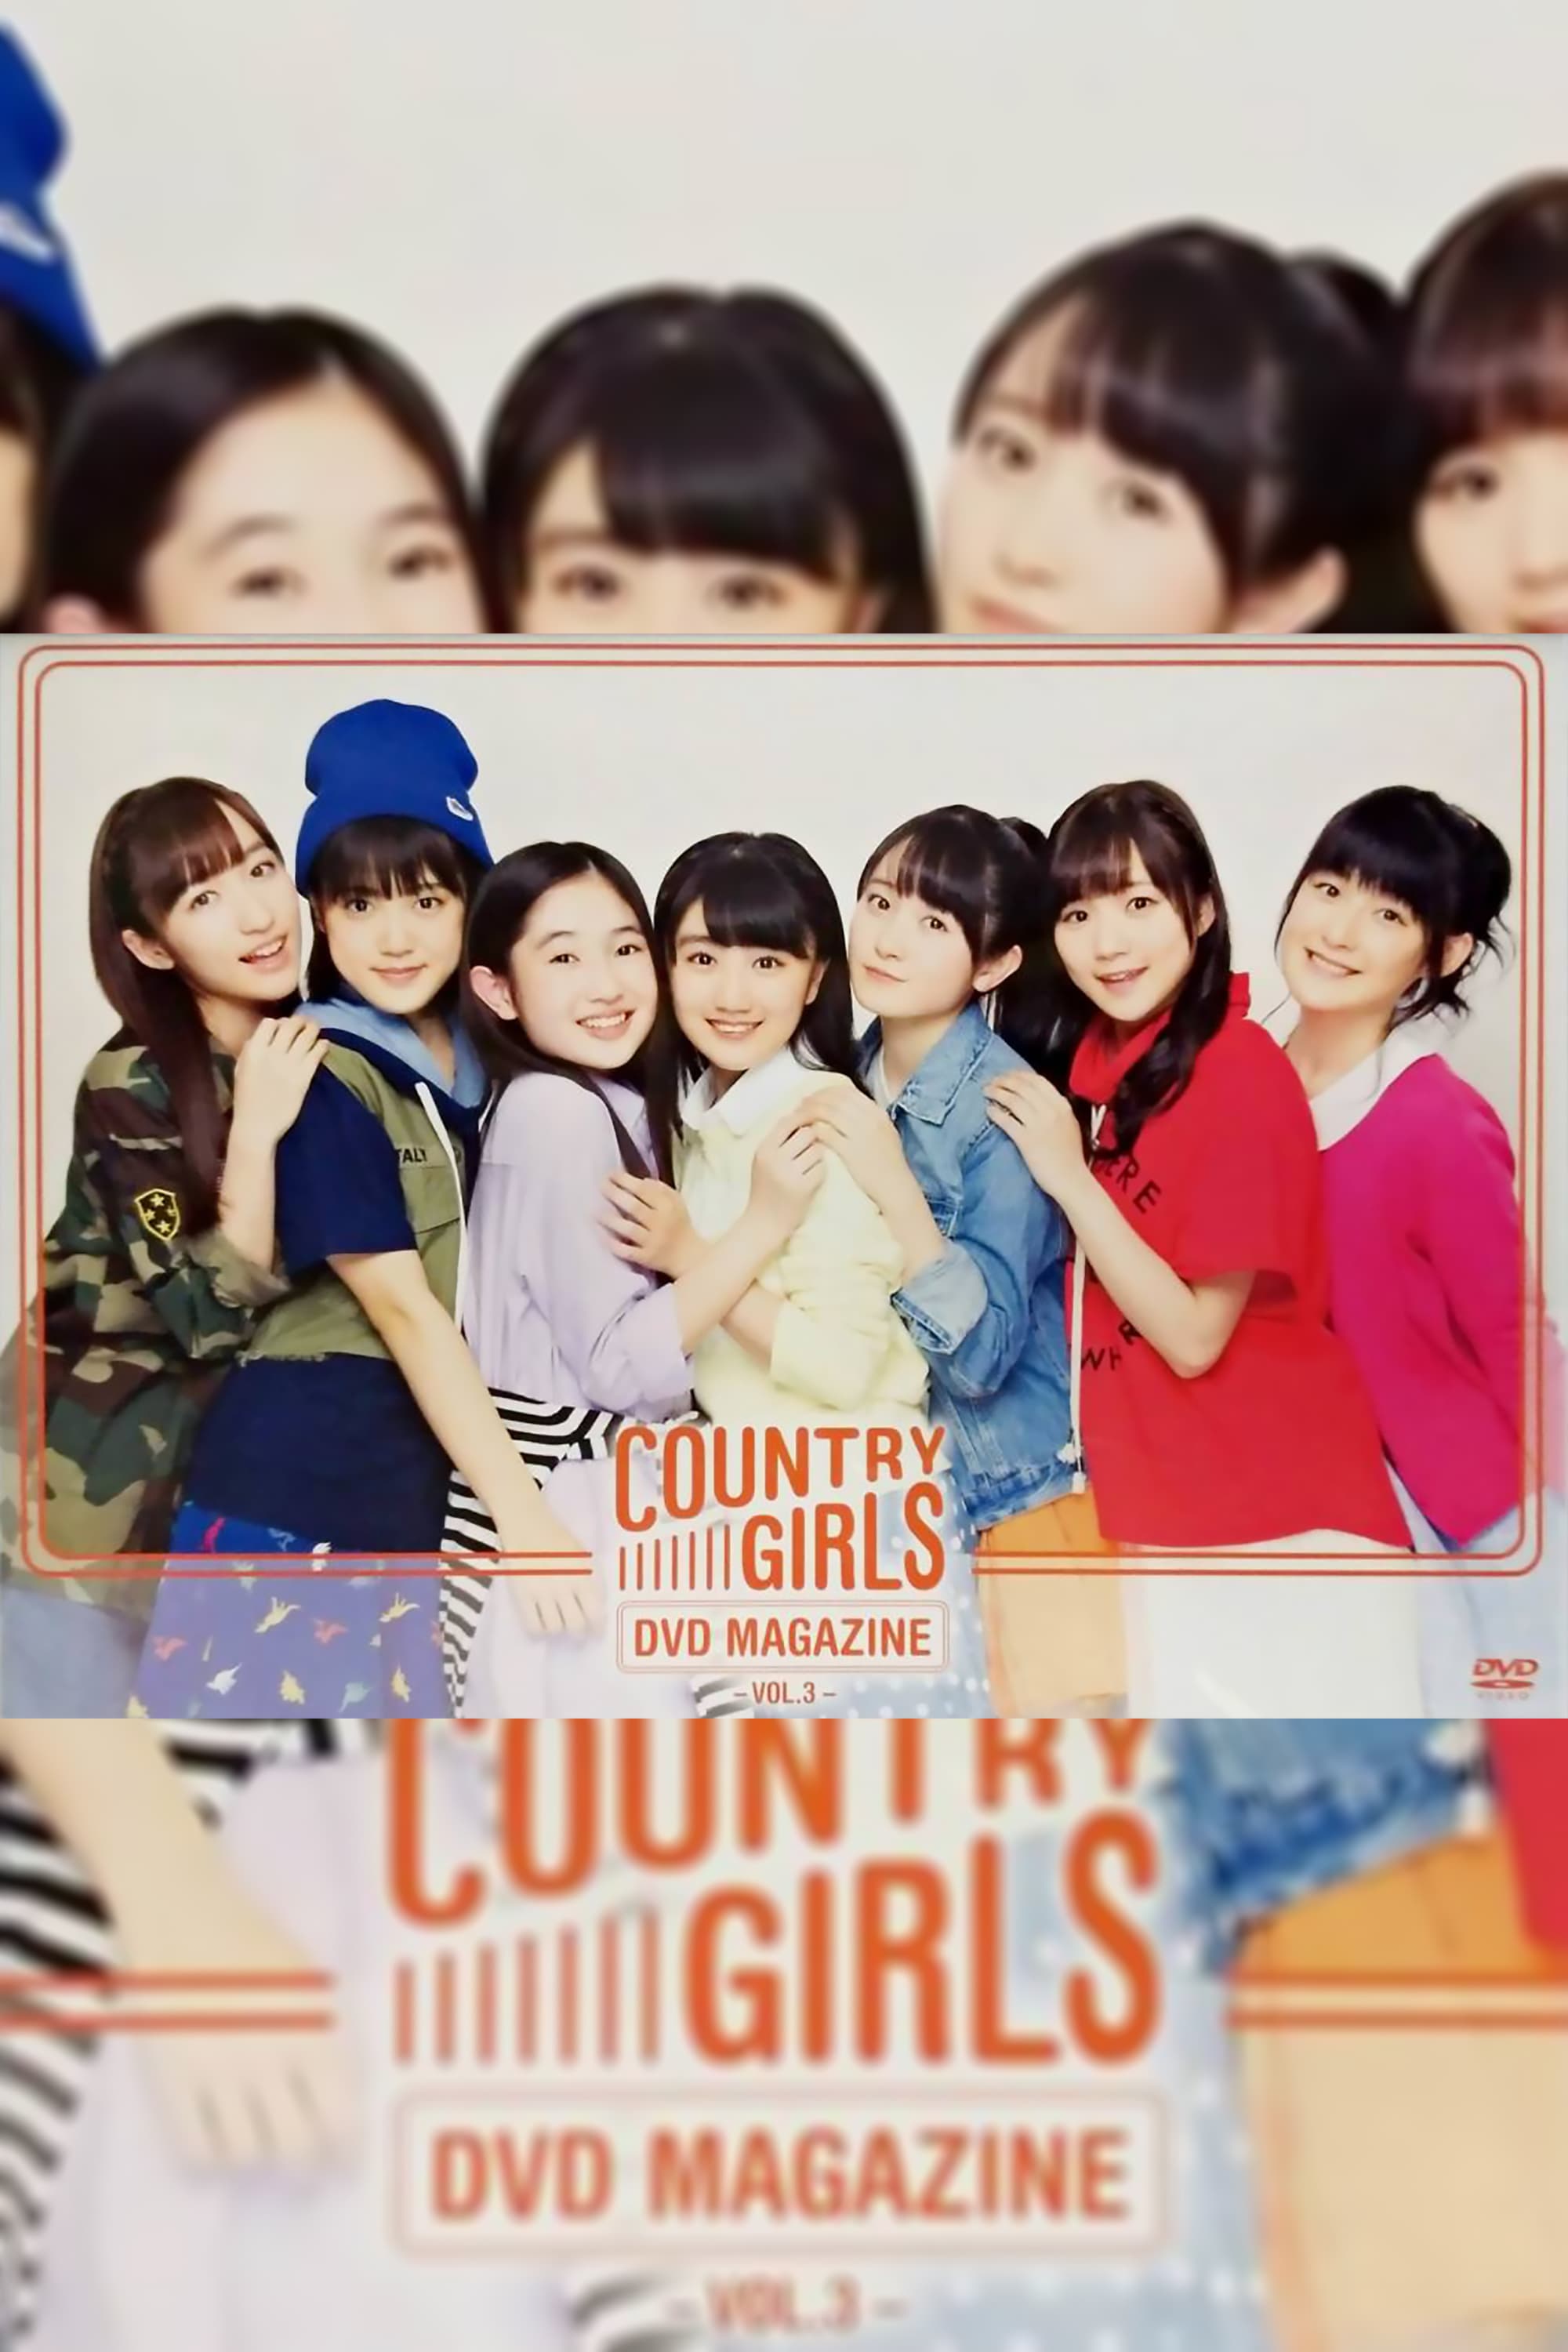 Country Girls DVD Magazine Vol.3